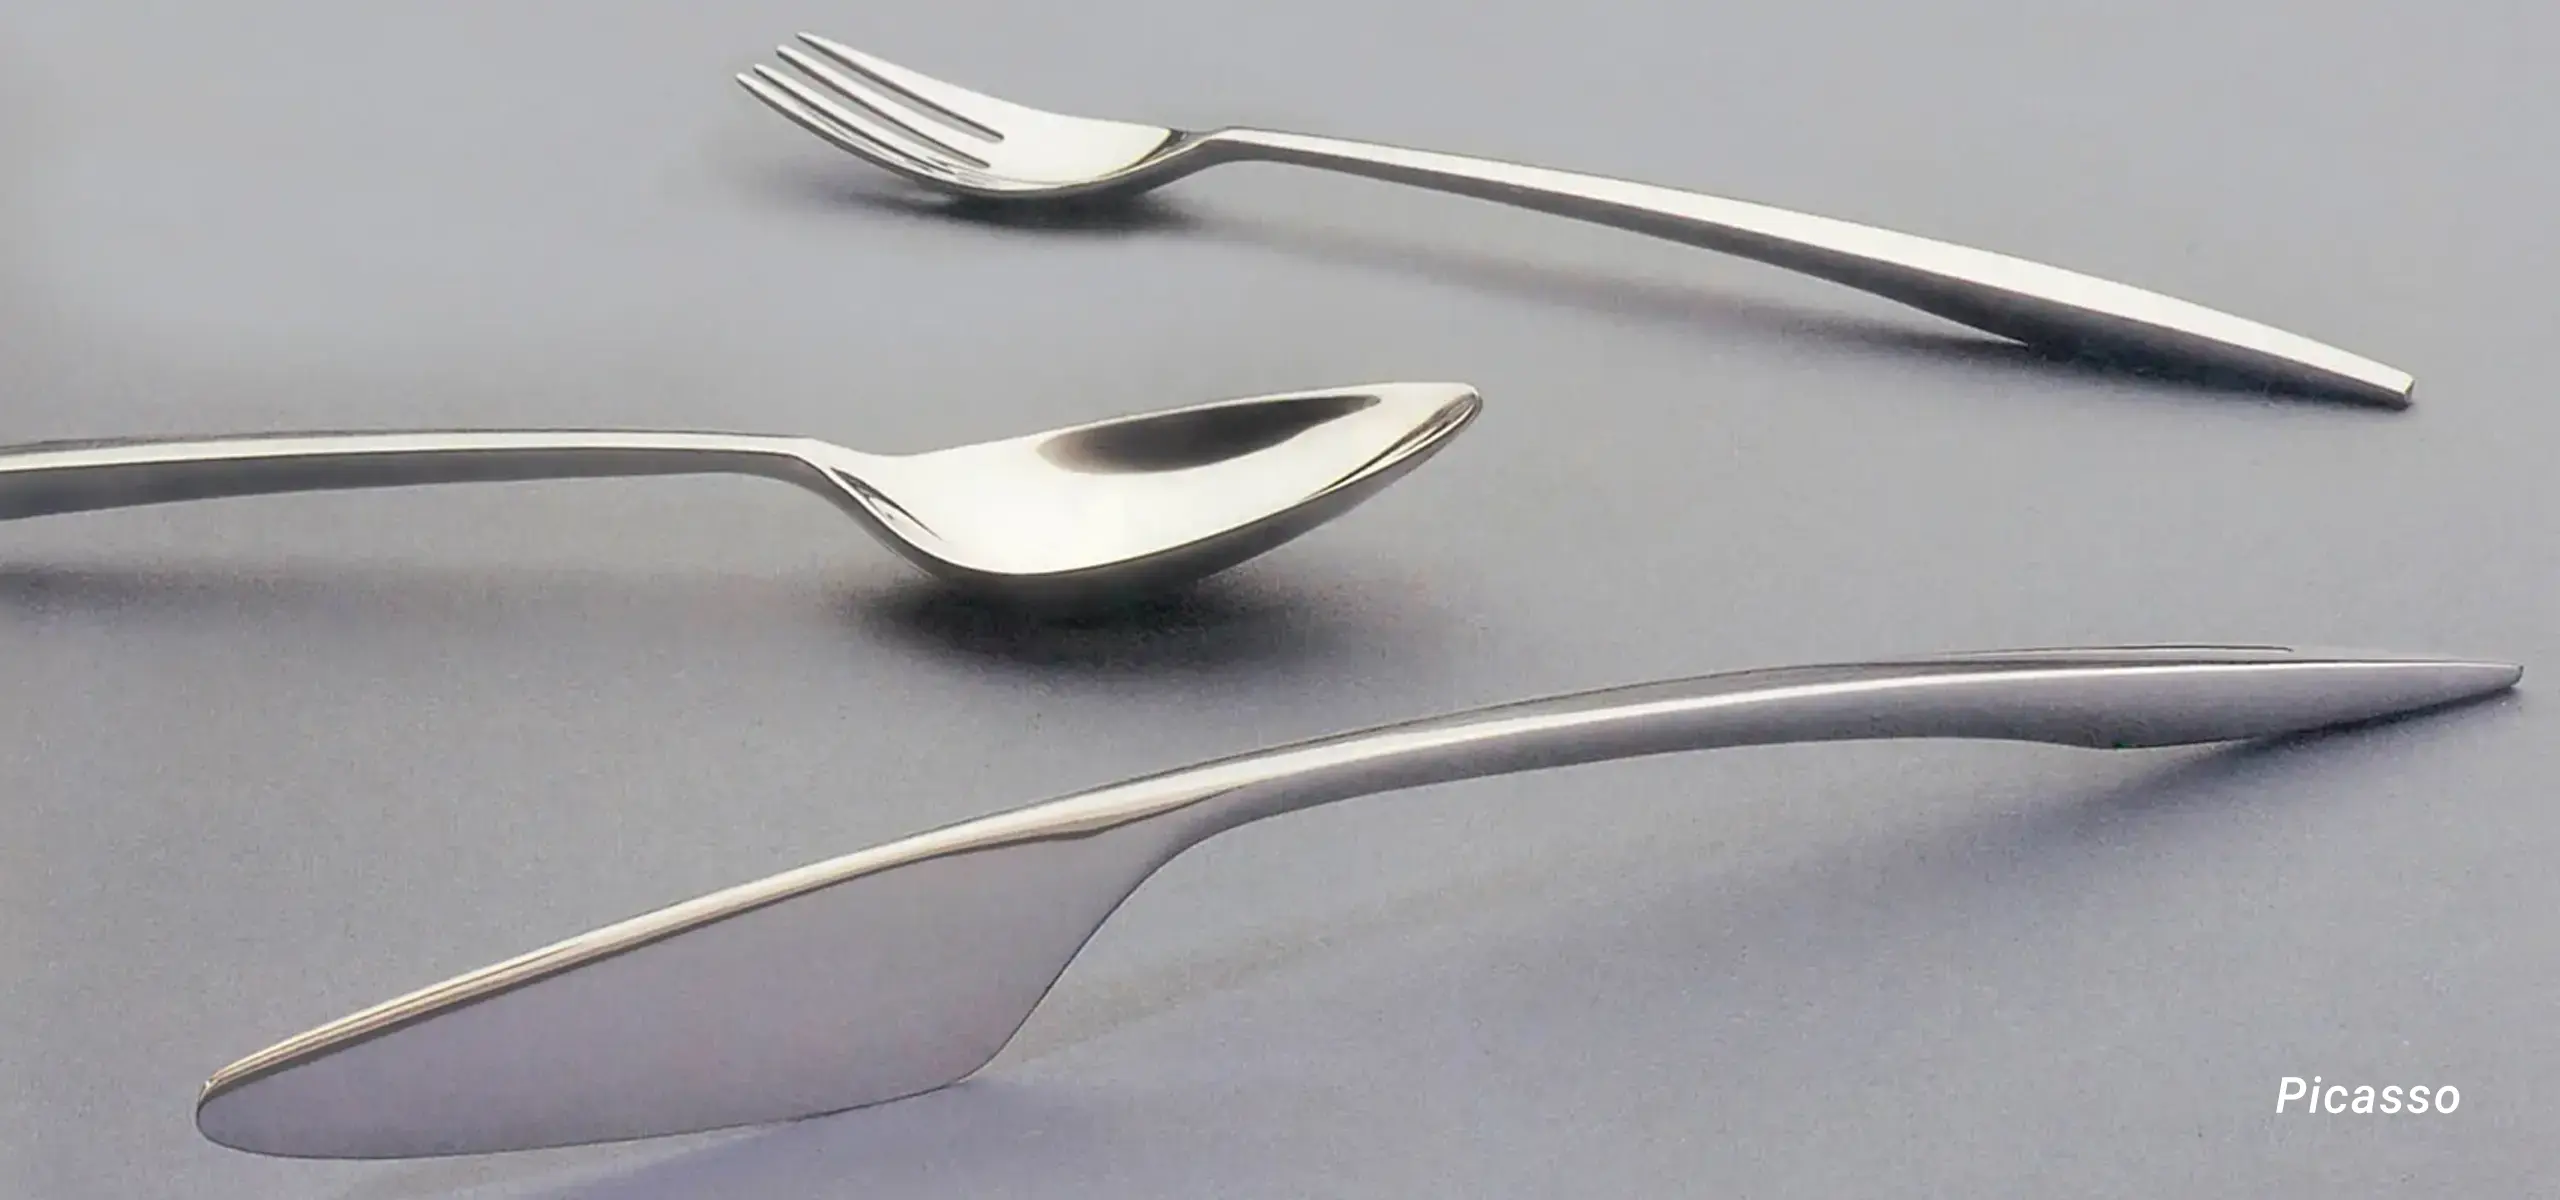 cutlery-design-picasso